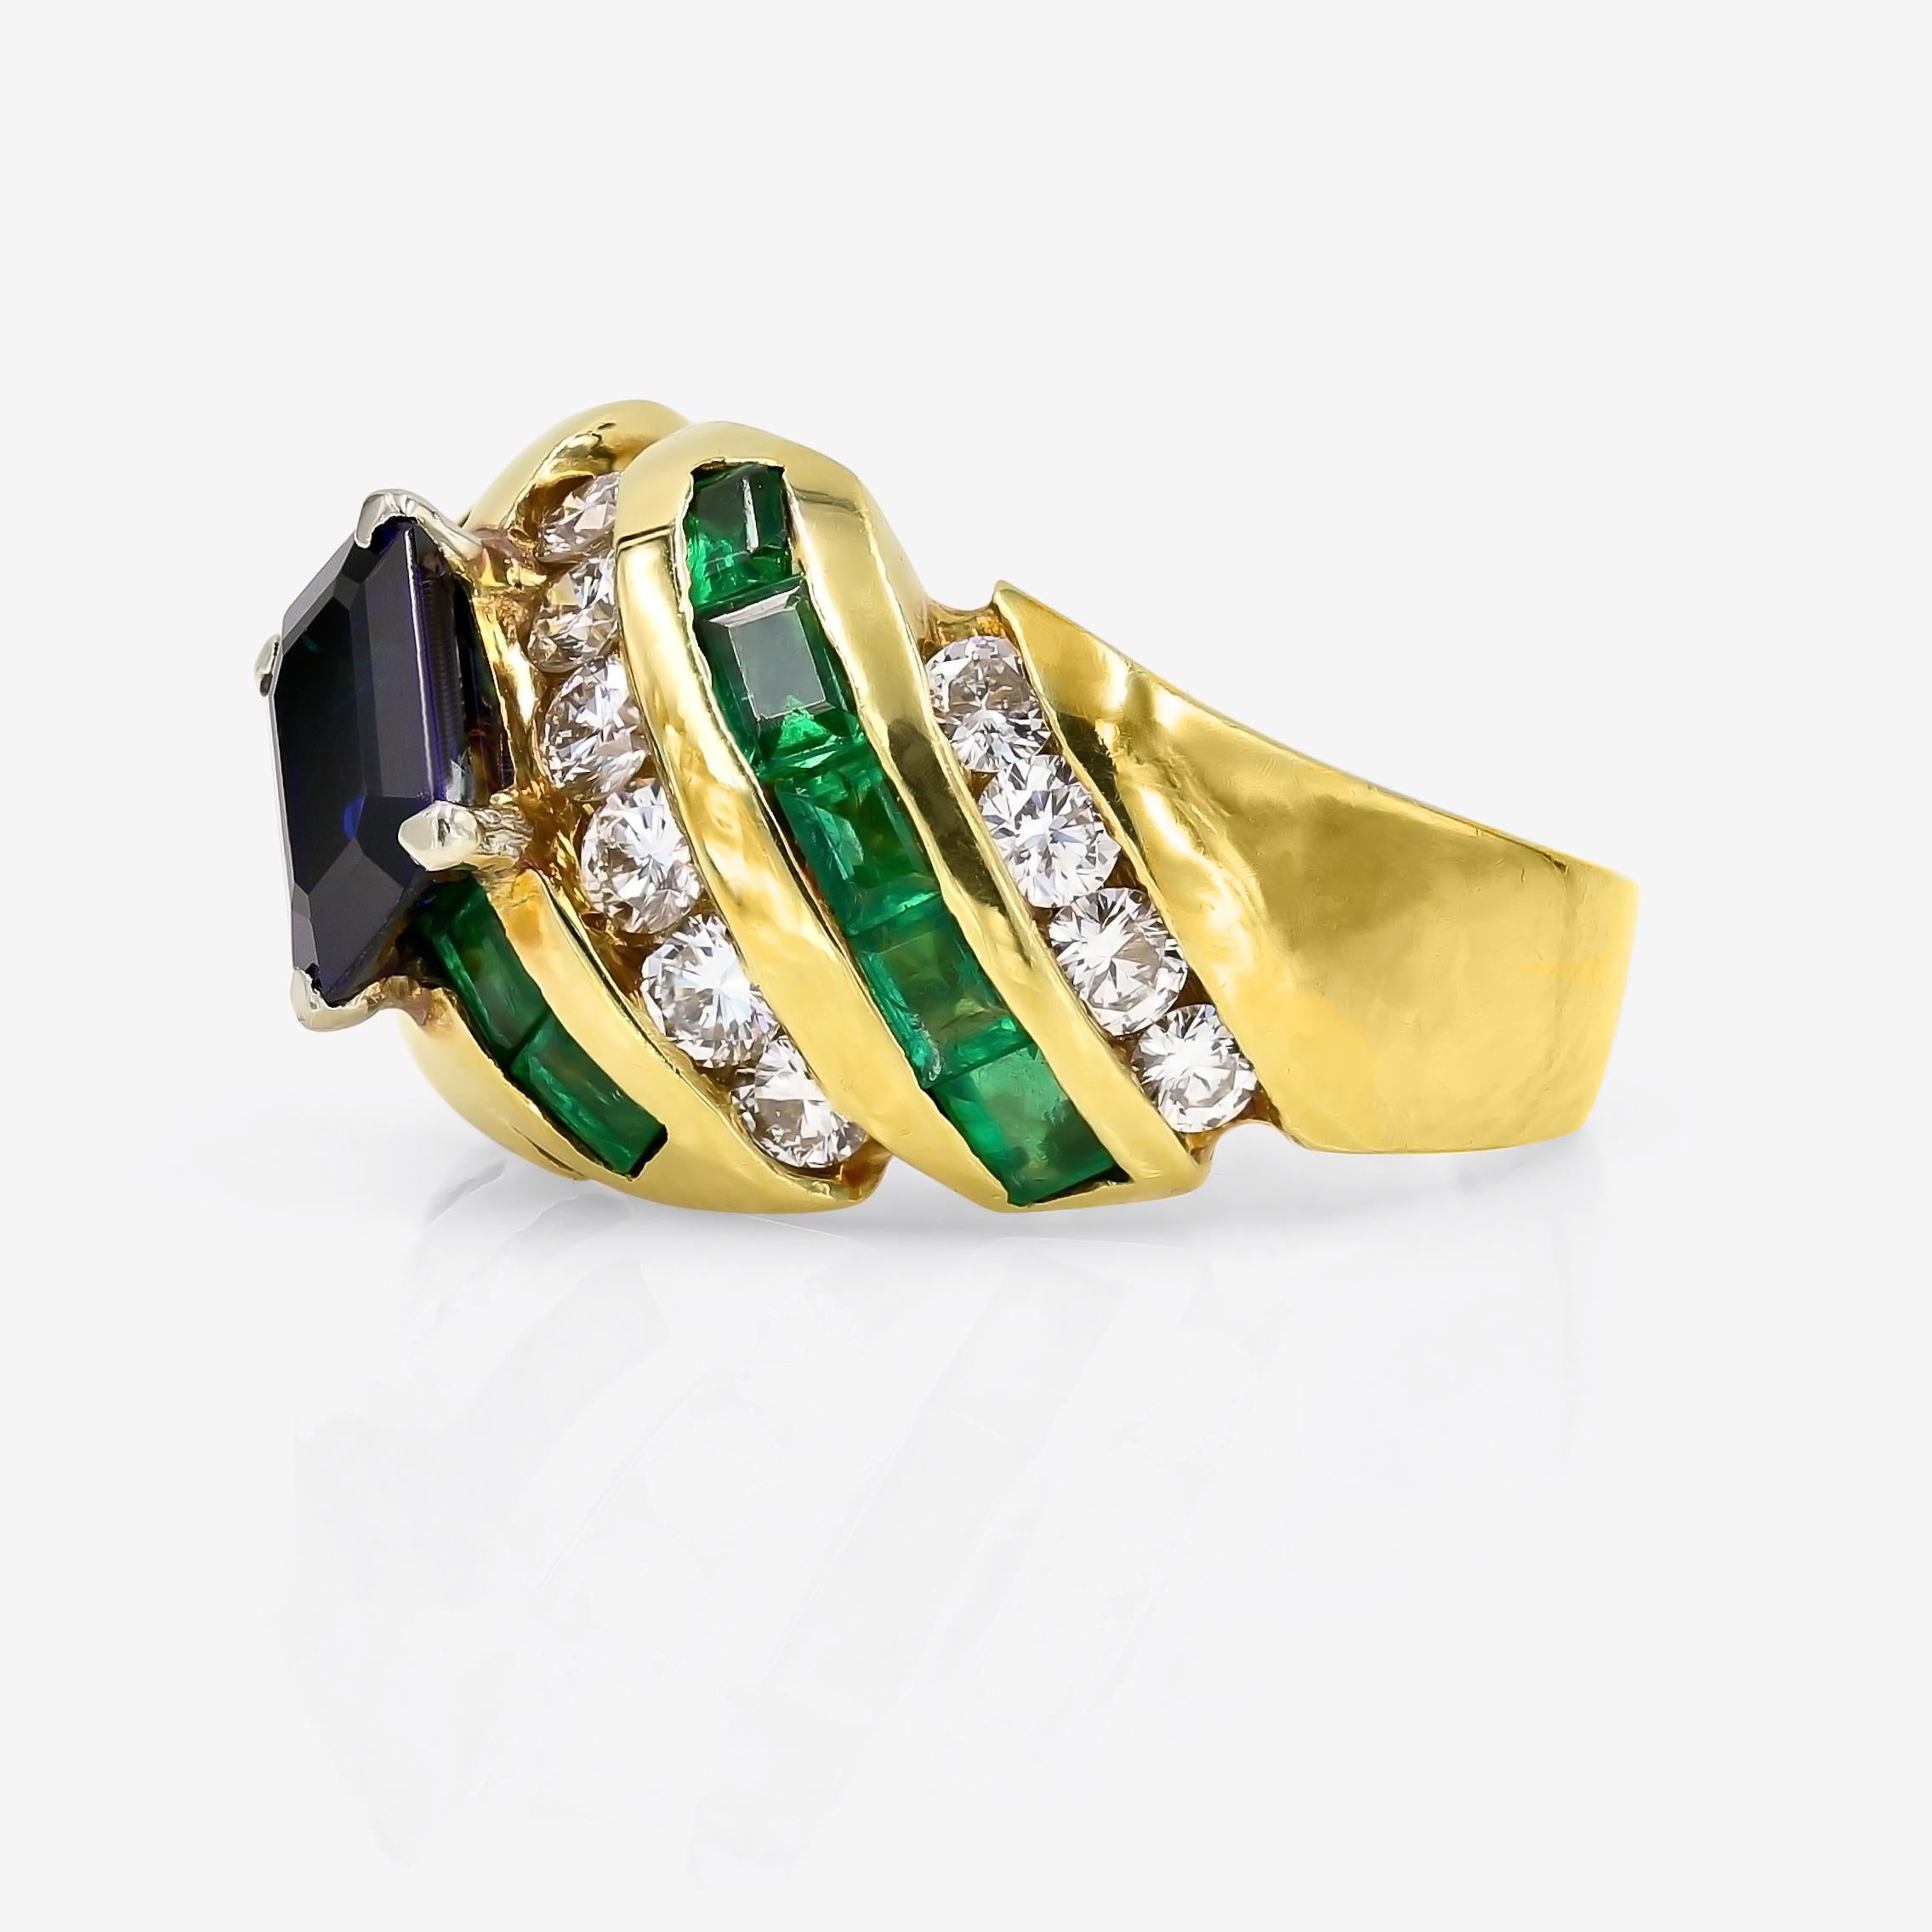 Emerald Cut Emerald, Sapphire and Diamond Ring in 18 Karat Yellow Gold